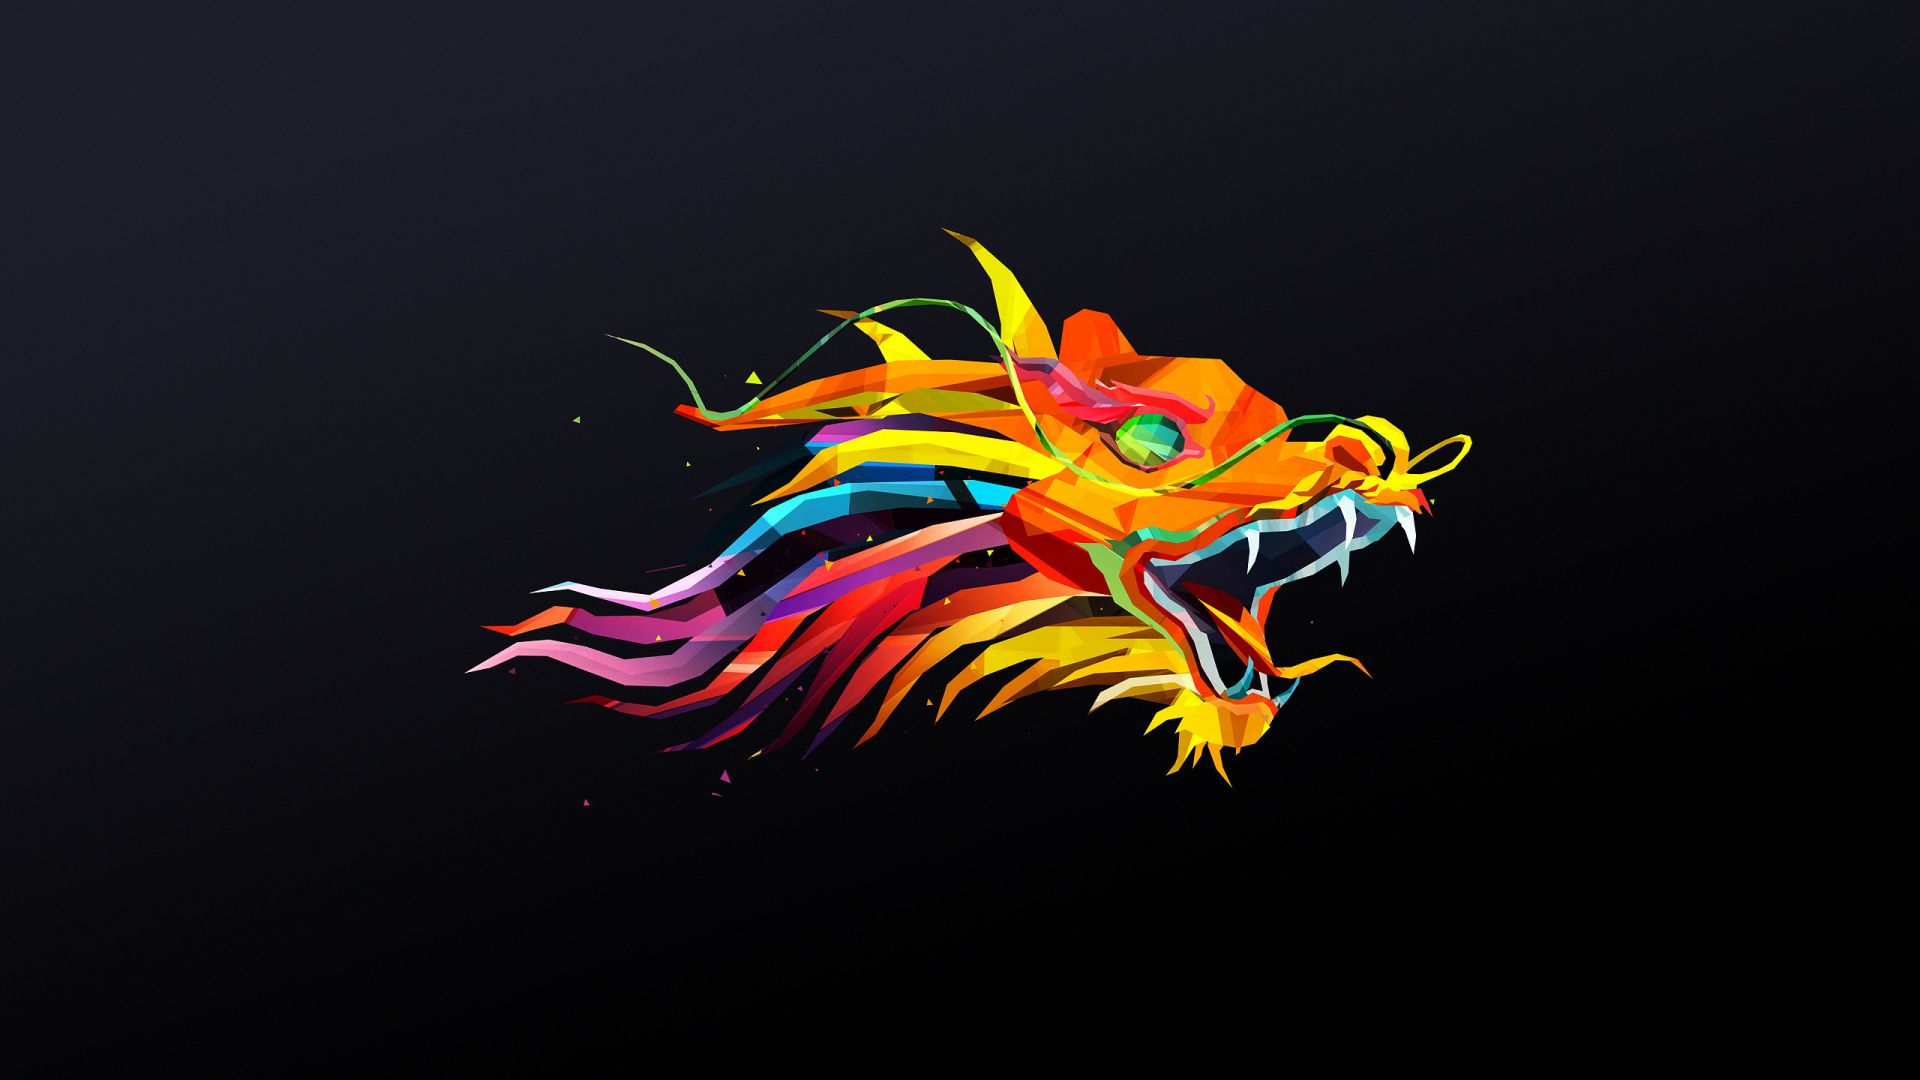 Wallpaper Dragon low poly colorful artwork